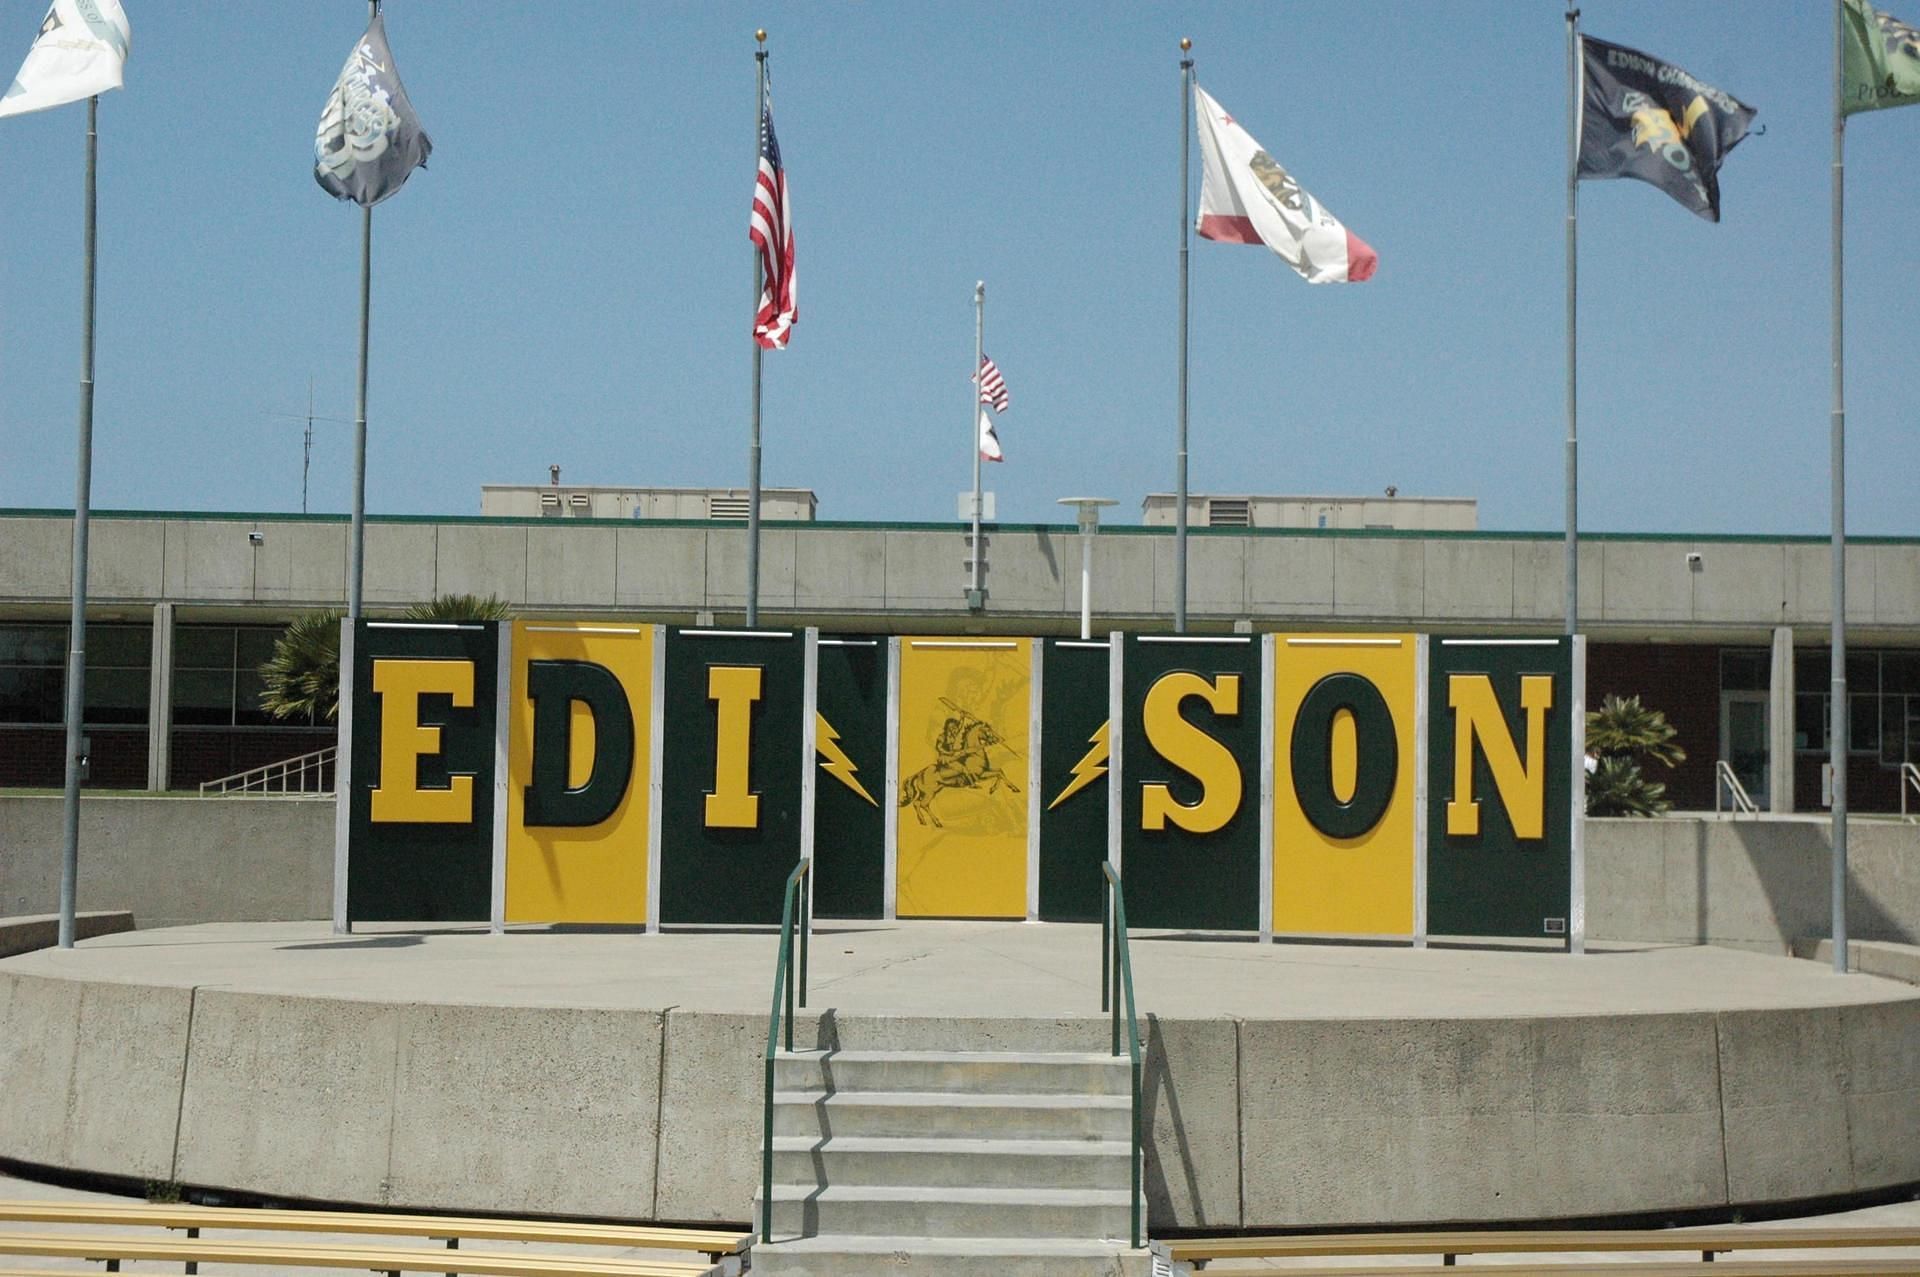 Edison High School garners backlash after showing kids Pride video (Image via Edison High School)